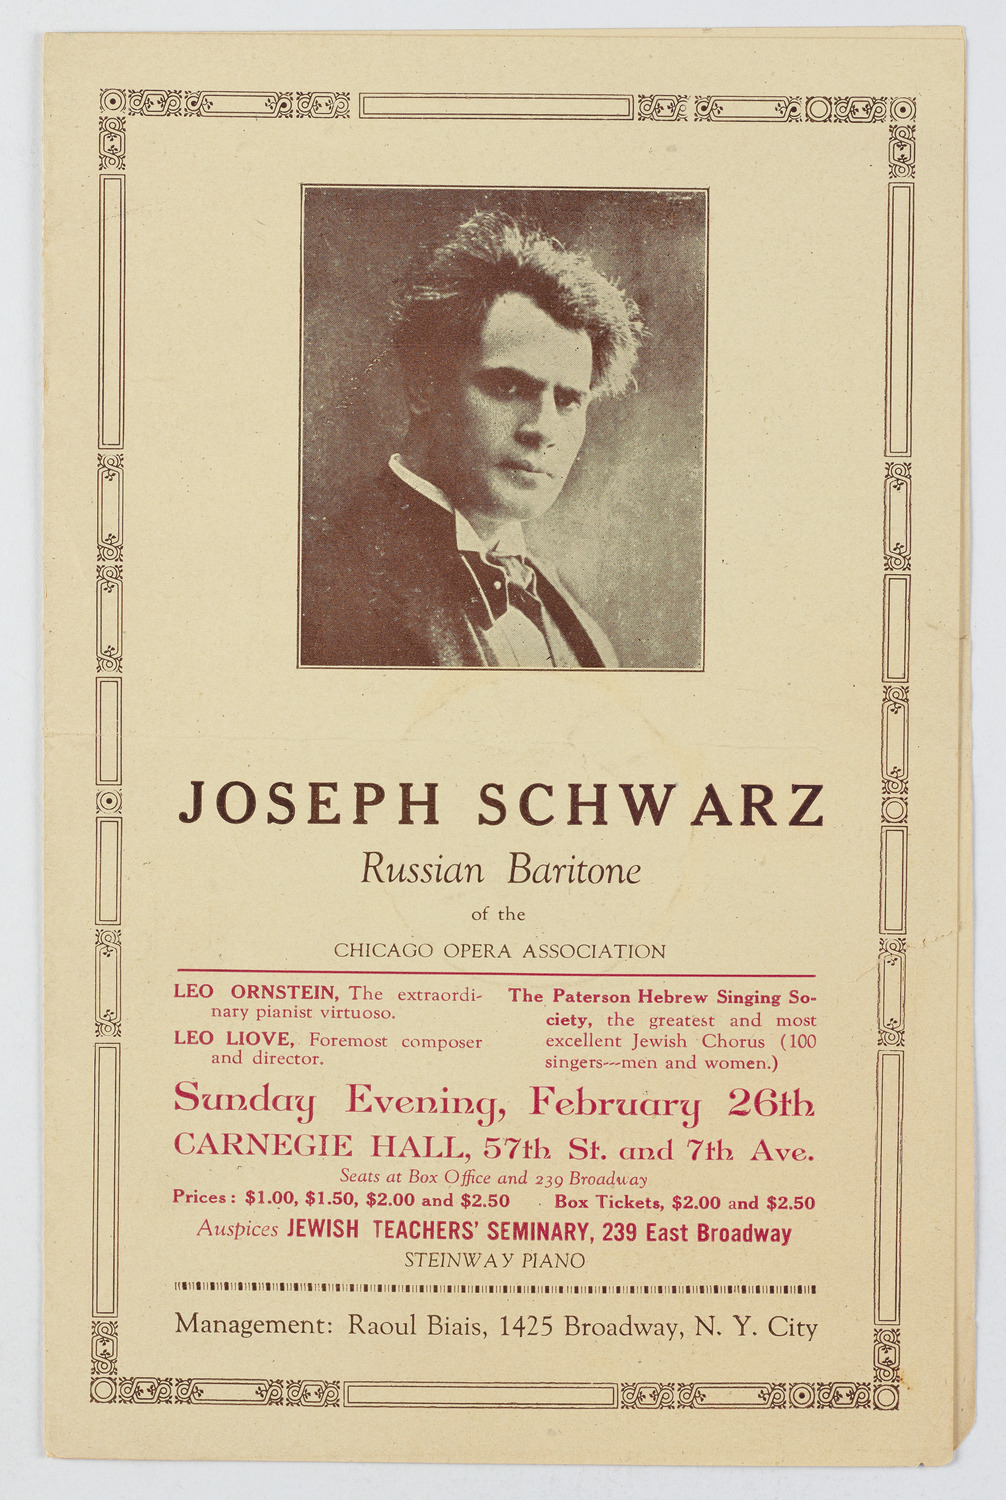 Joseph Schwarz, as part of Jewish Teachers' Seminary Concert, February 26, 1922